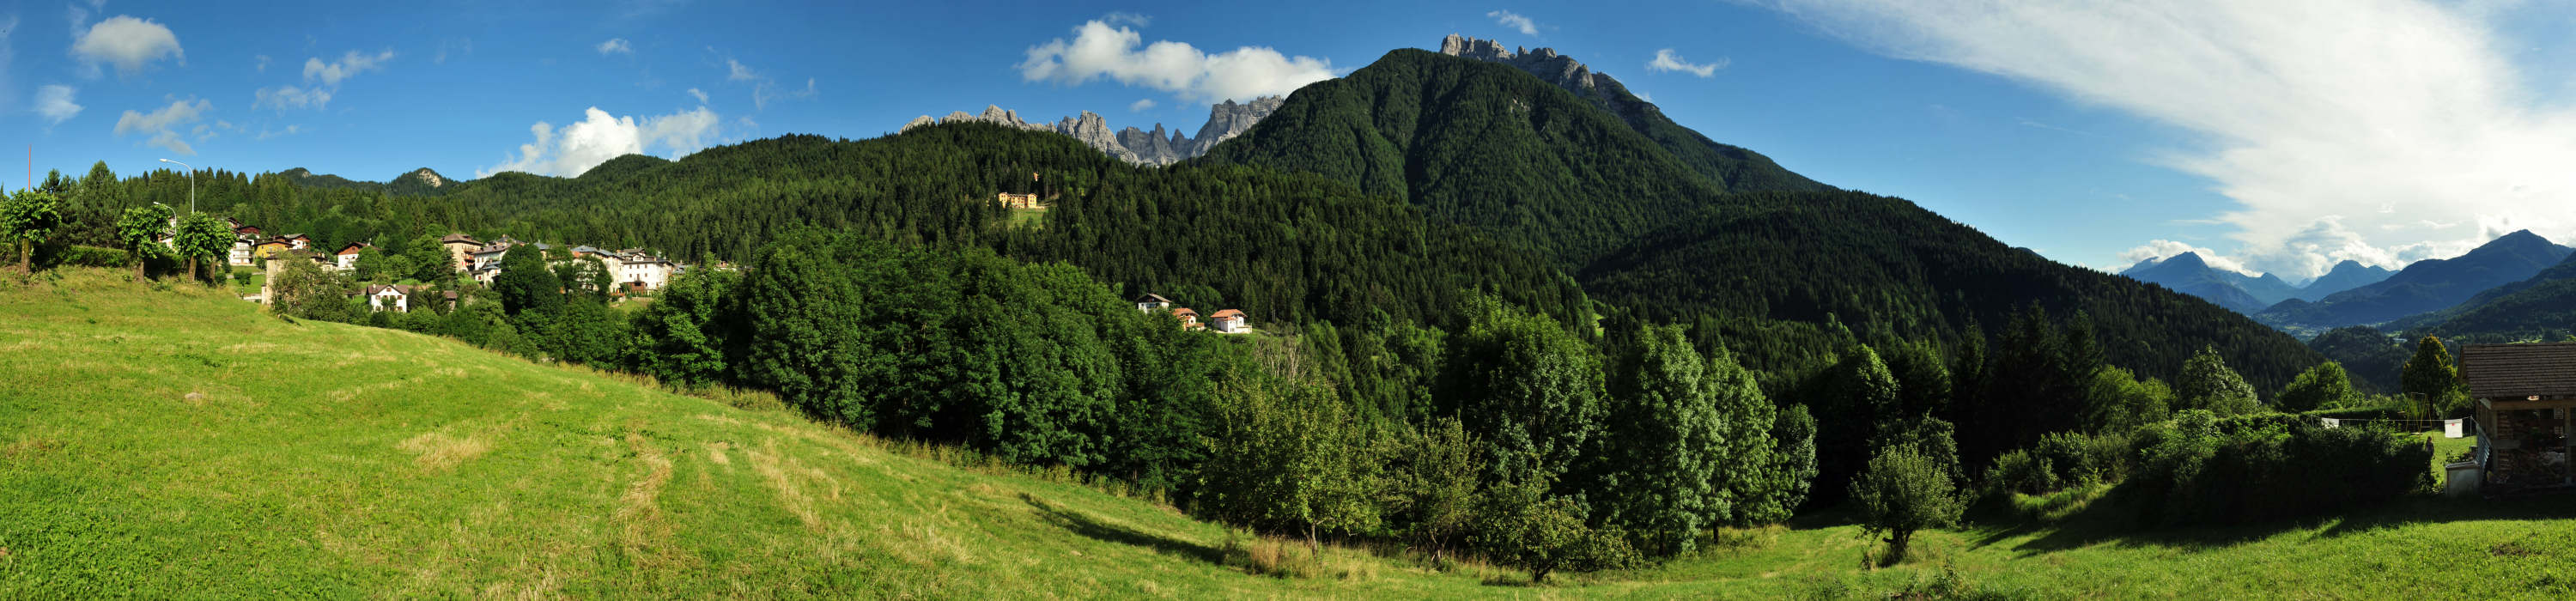 Dolomiti, Lorenzago di Cadore